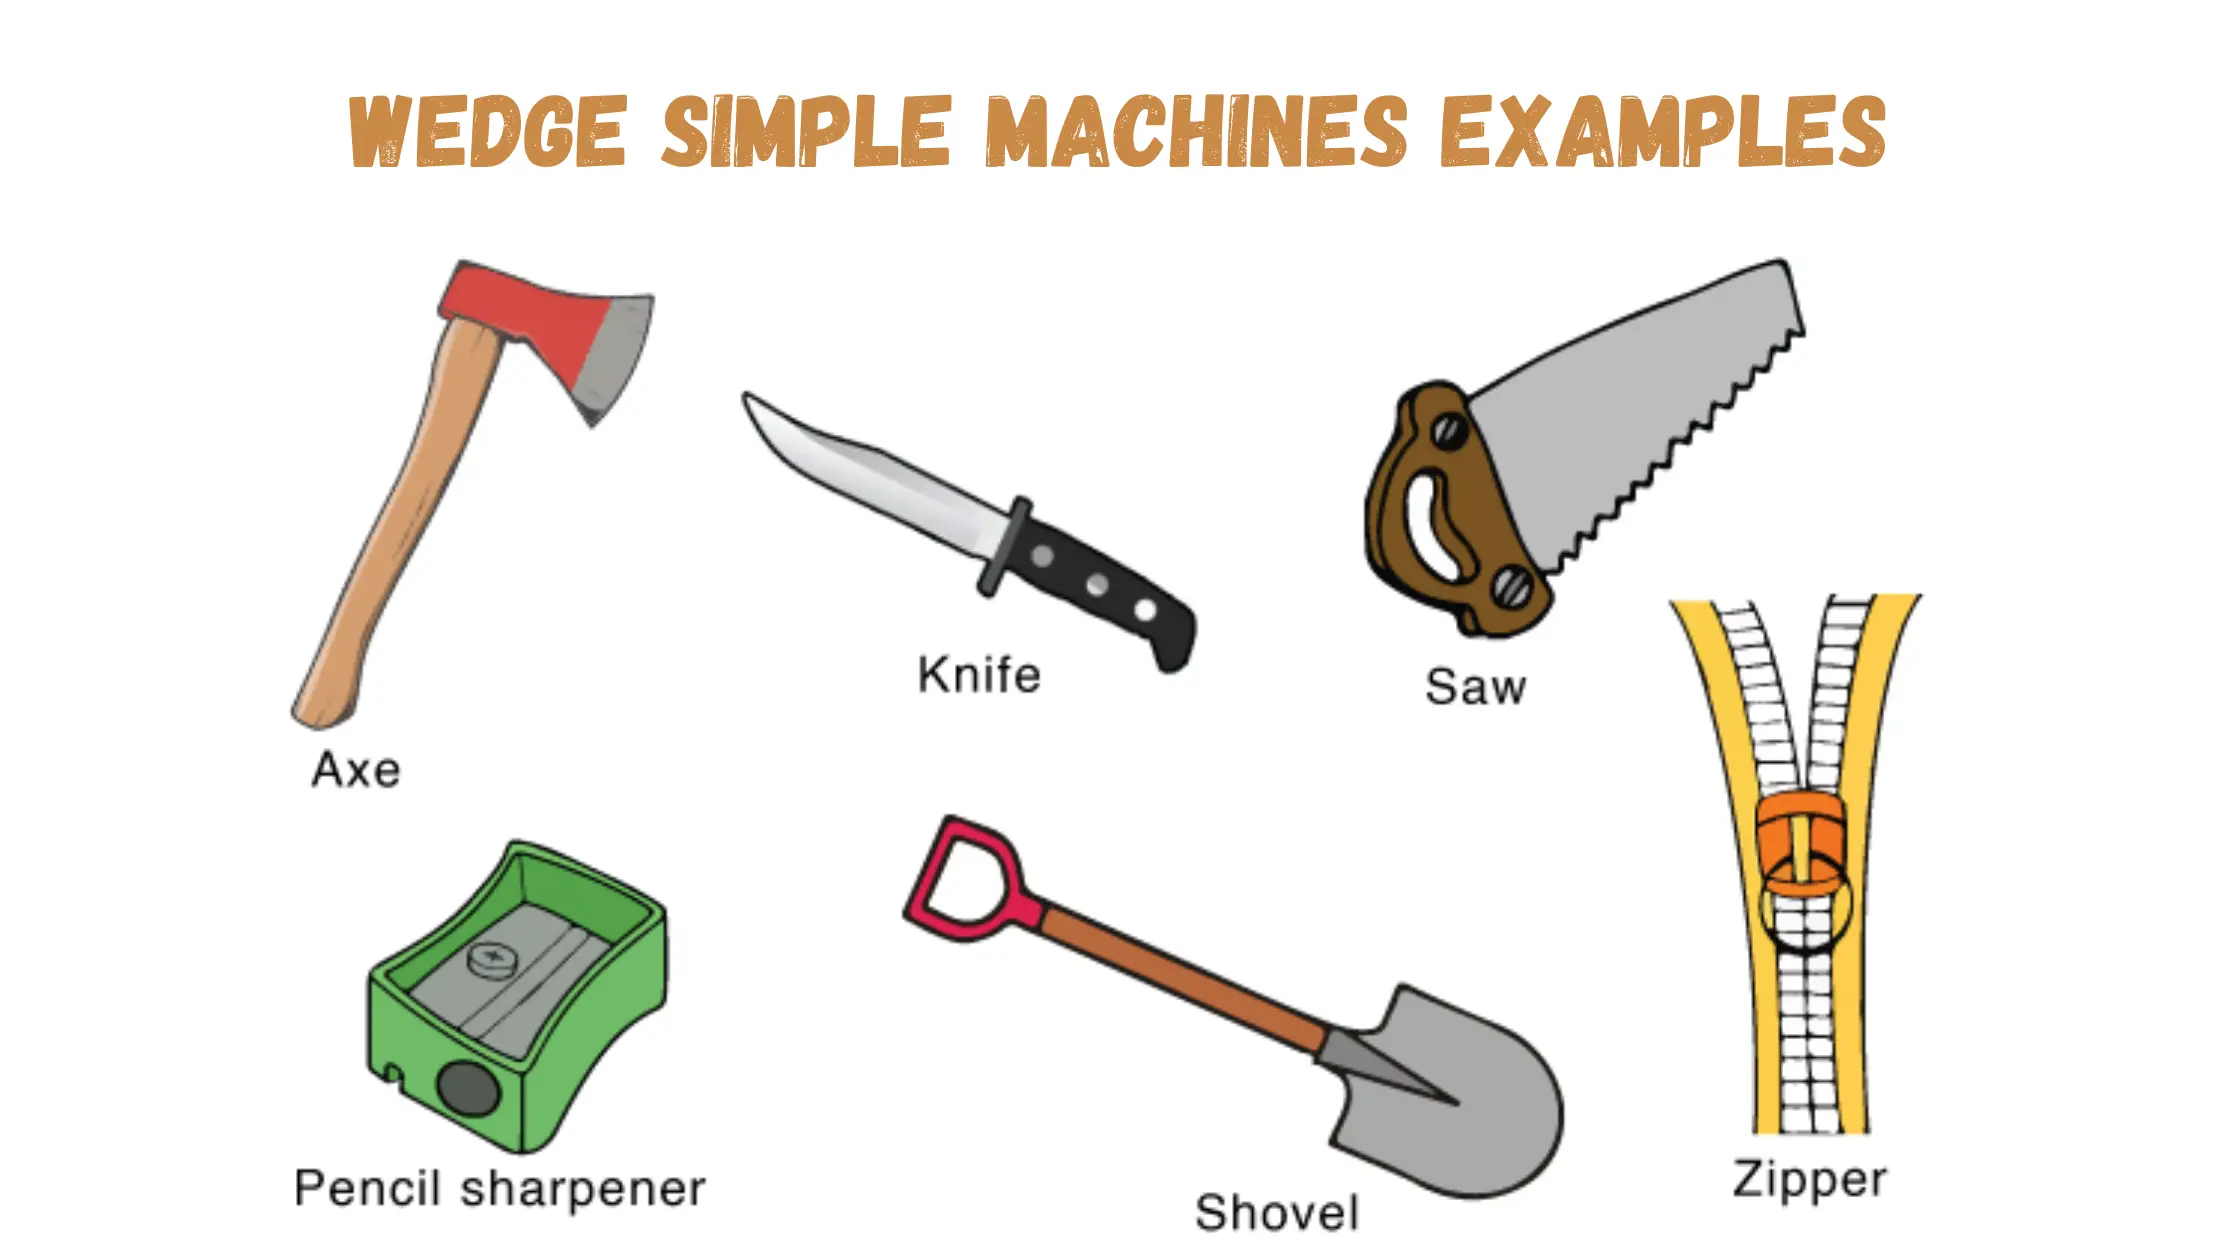 Wedge Simple Machines Examples